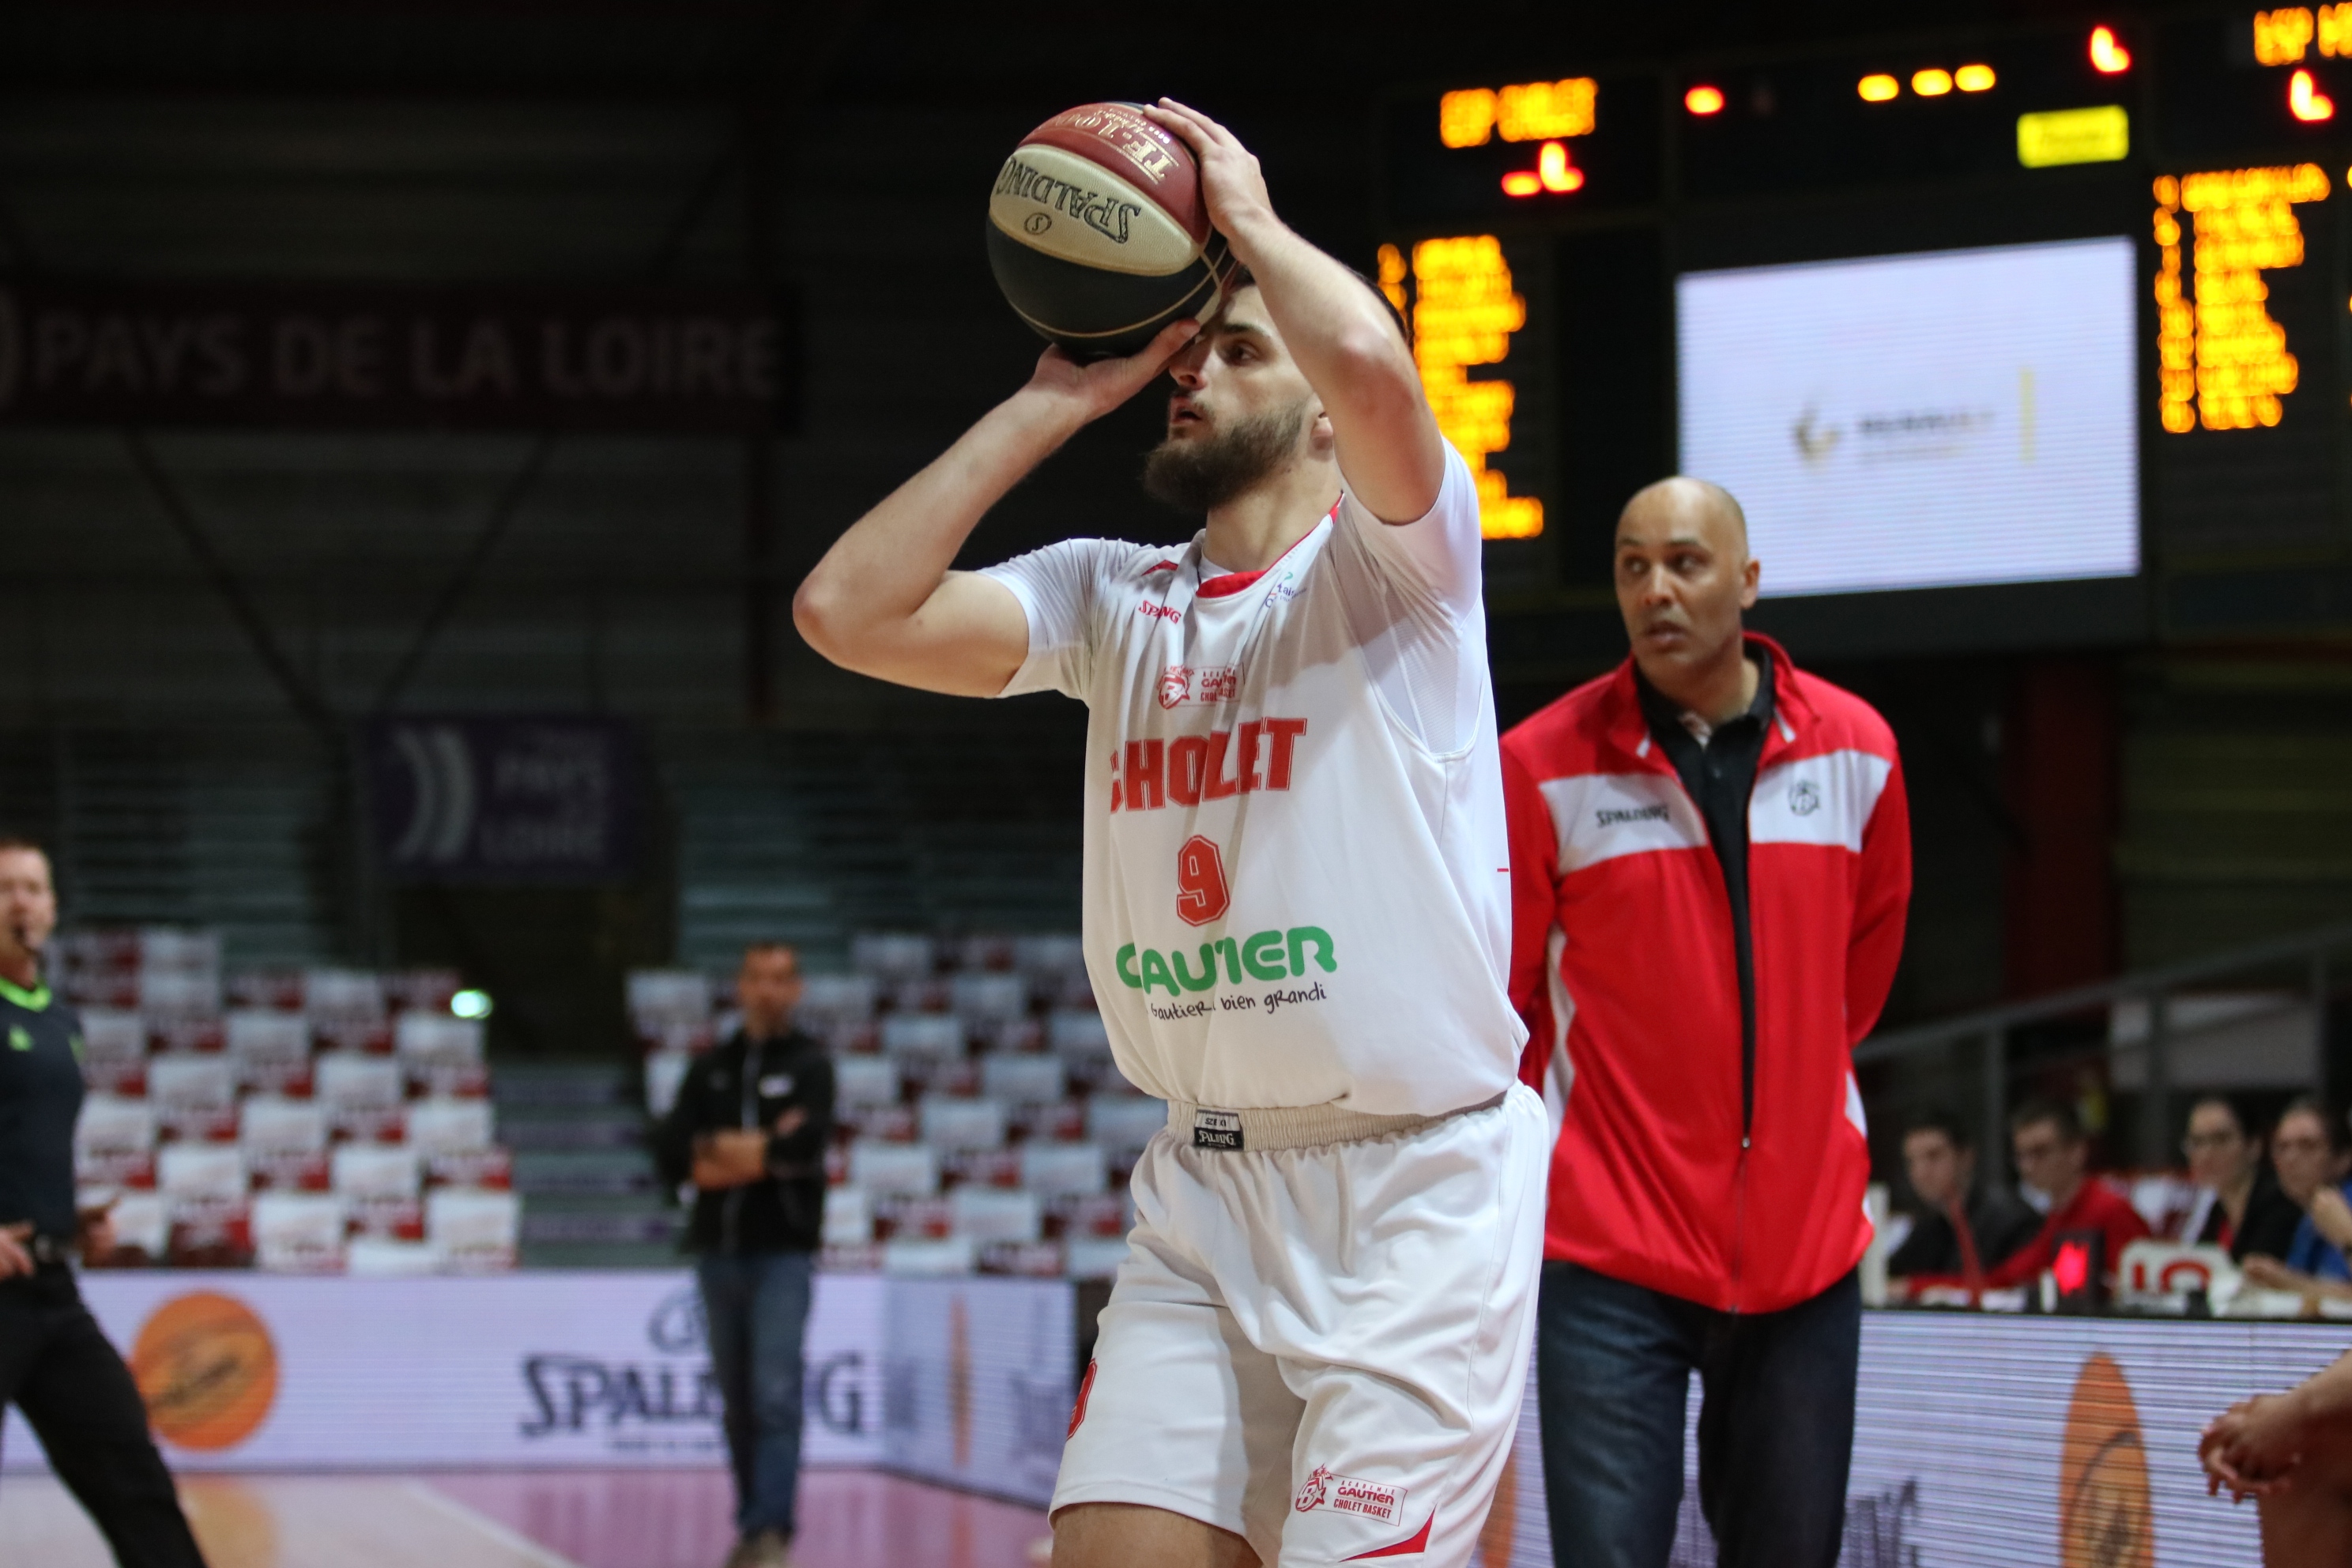 Académie Gautier Cholet Basket U21 - Fos Provence Basket (12-05-19)